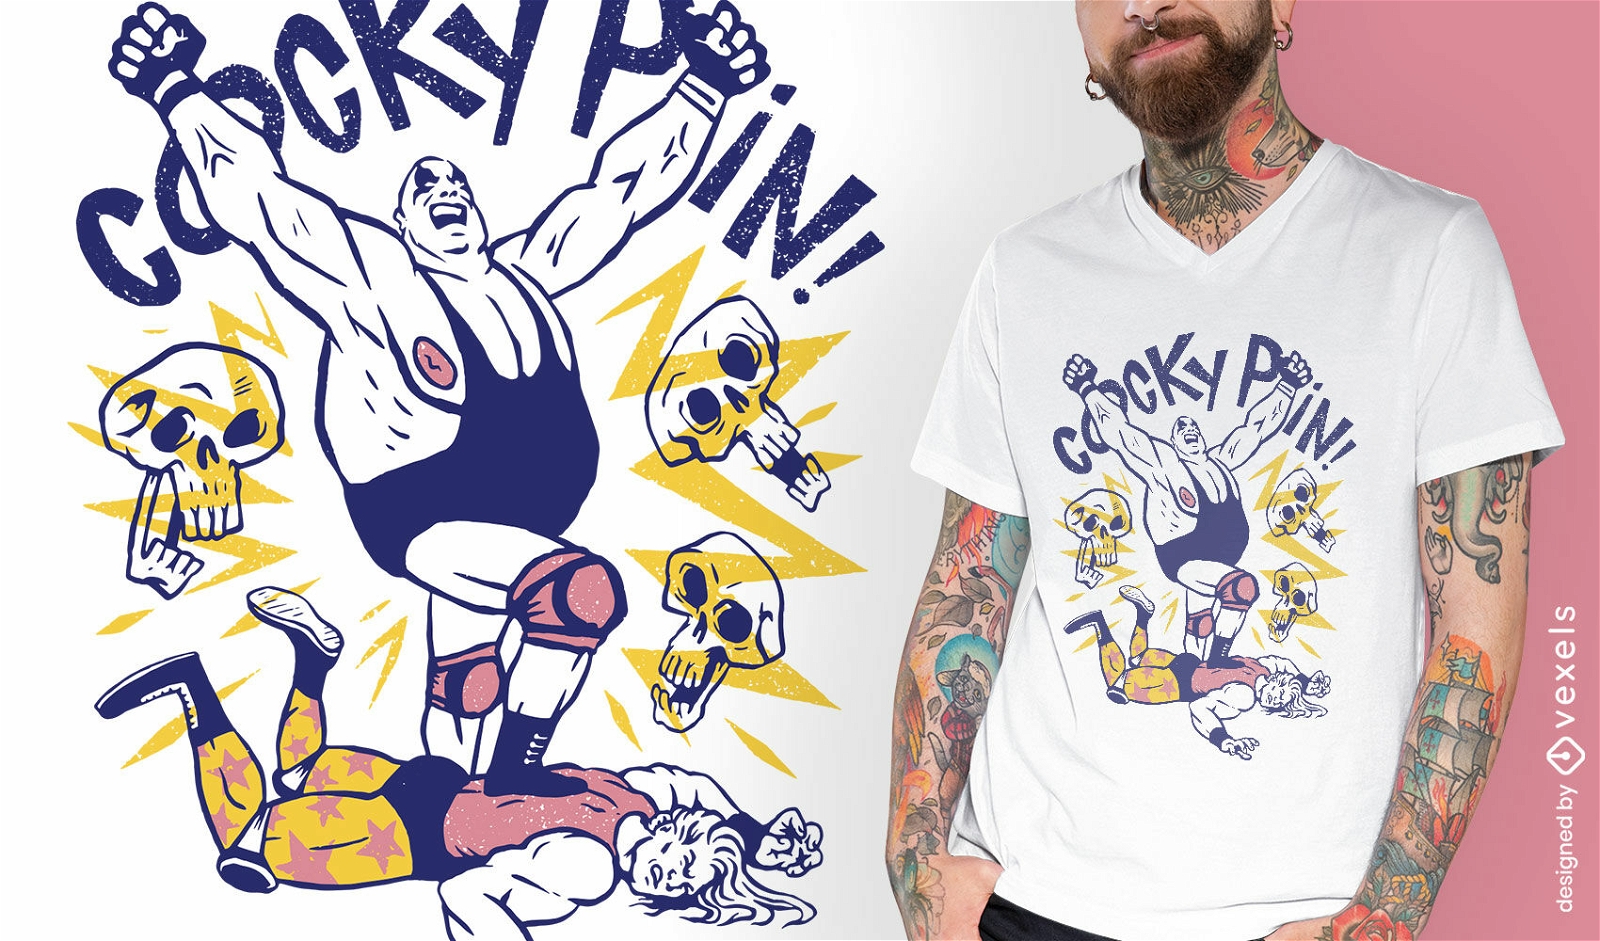 Cocky pin wrestling tshirt design